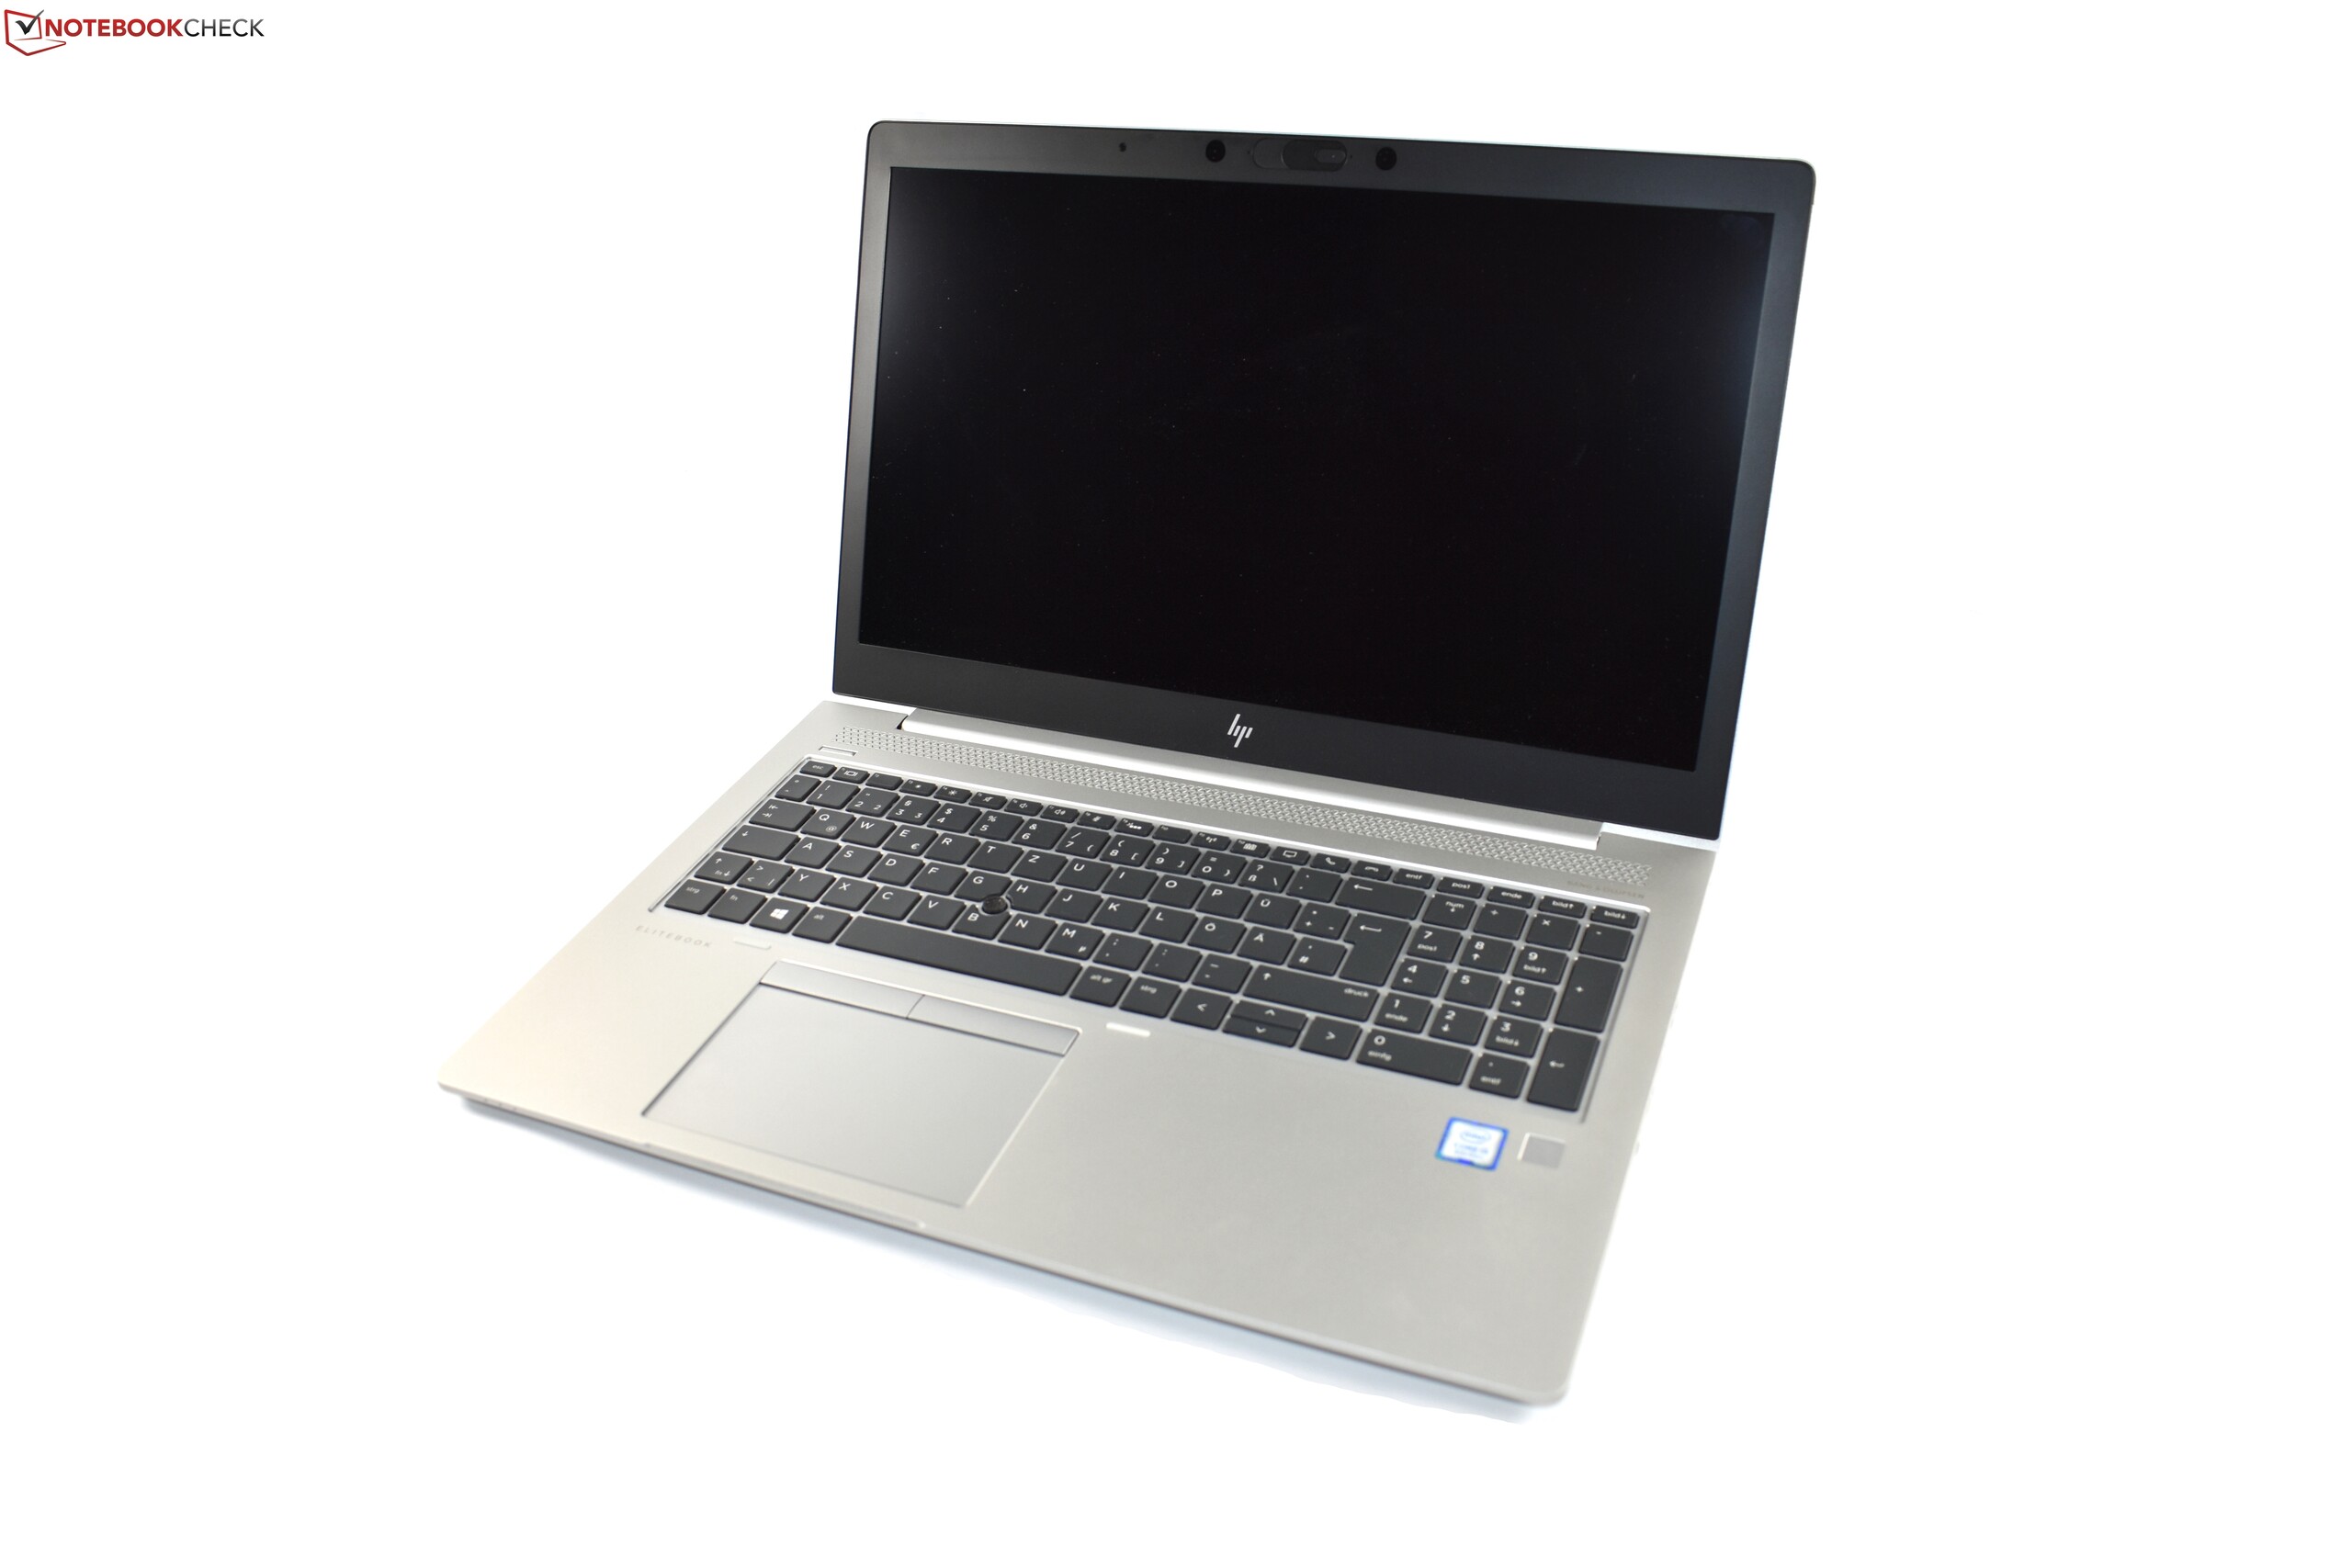 HP EliteBook 850 G5 (i5-8250U, FHD) Laptop Review - NotebookCheck